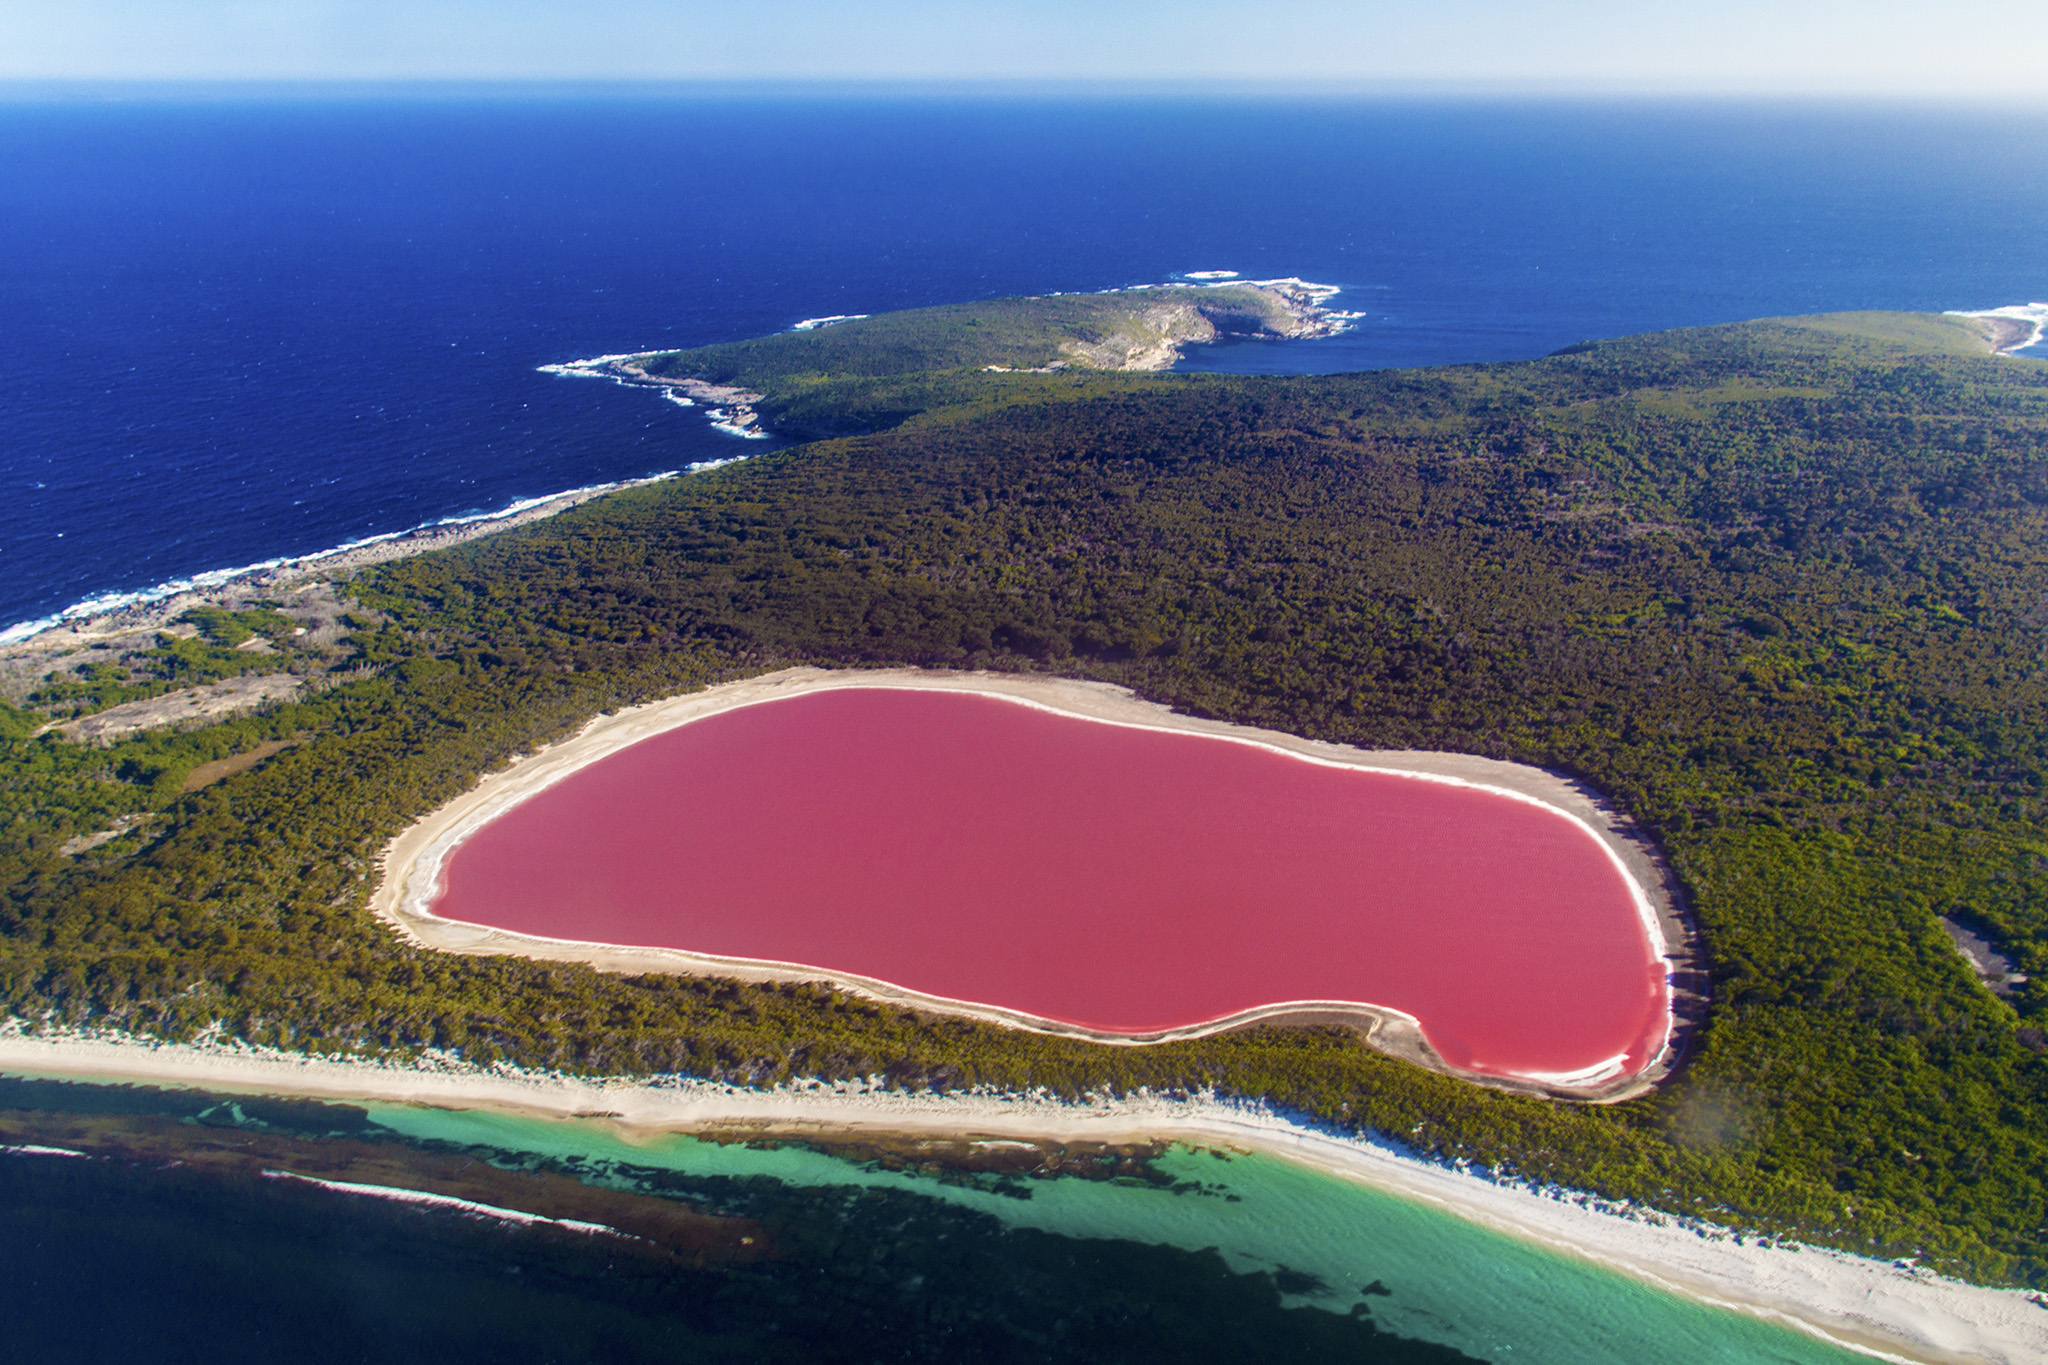 Озеро хиллер австралия. Озеро Хиллиер, Австралия. Розовое озеро Хиллер Австралия. Озеро Хиллиер, Западная Австралия. Озеро Хиллер (остров Миддл).